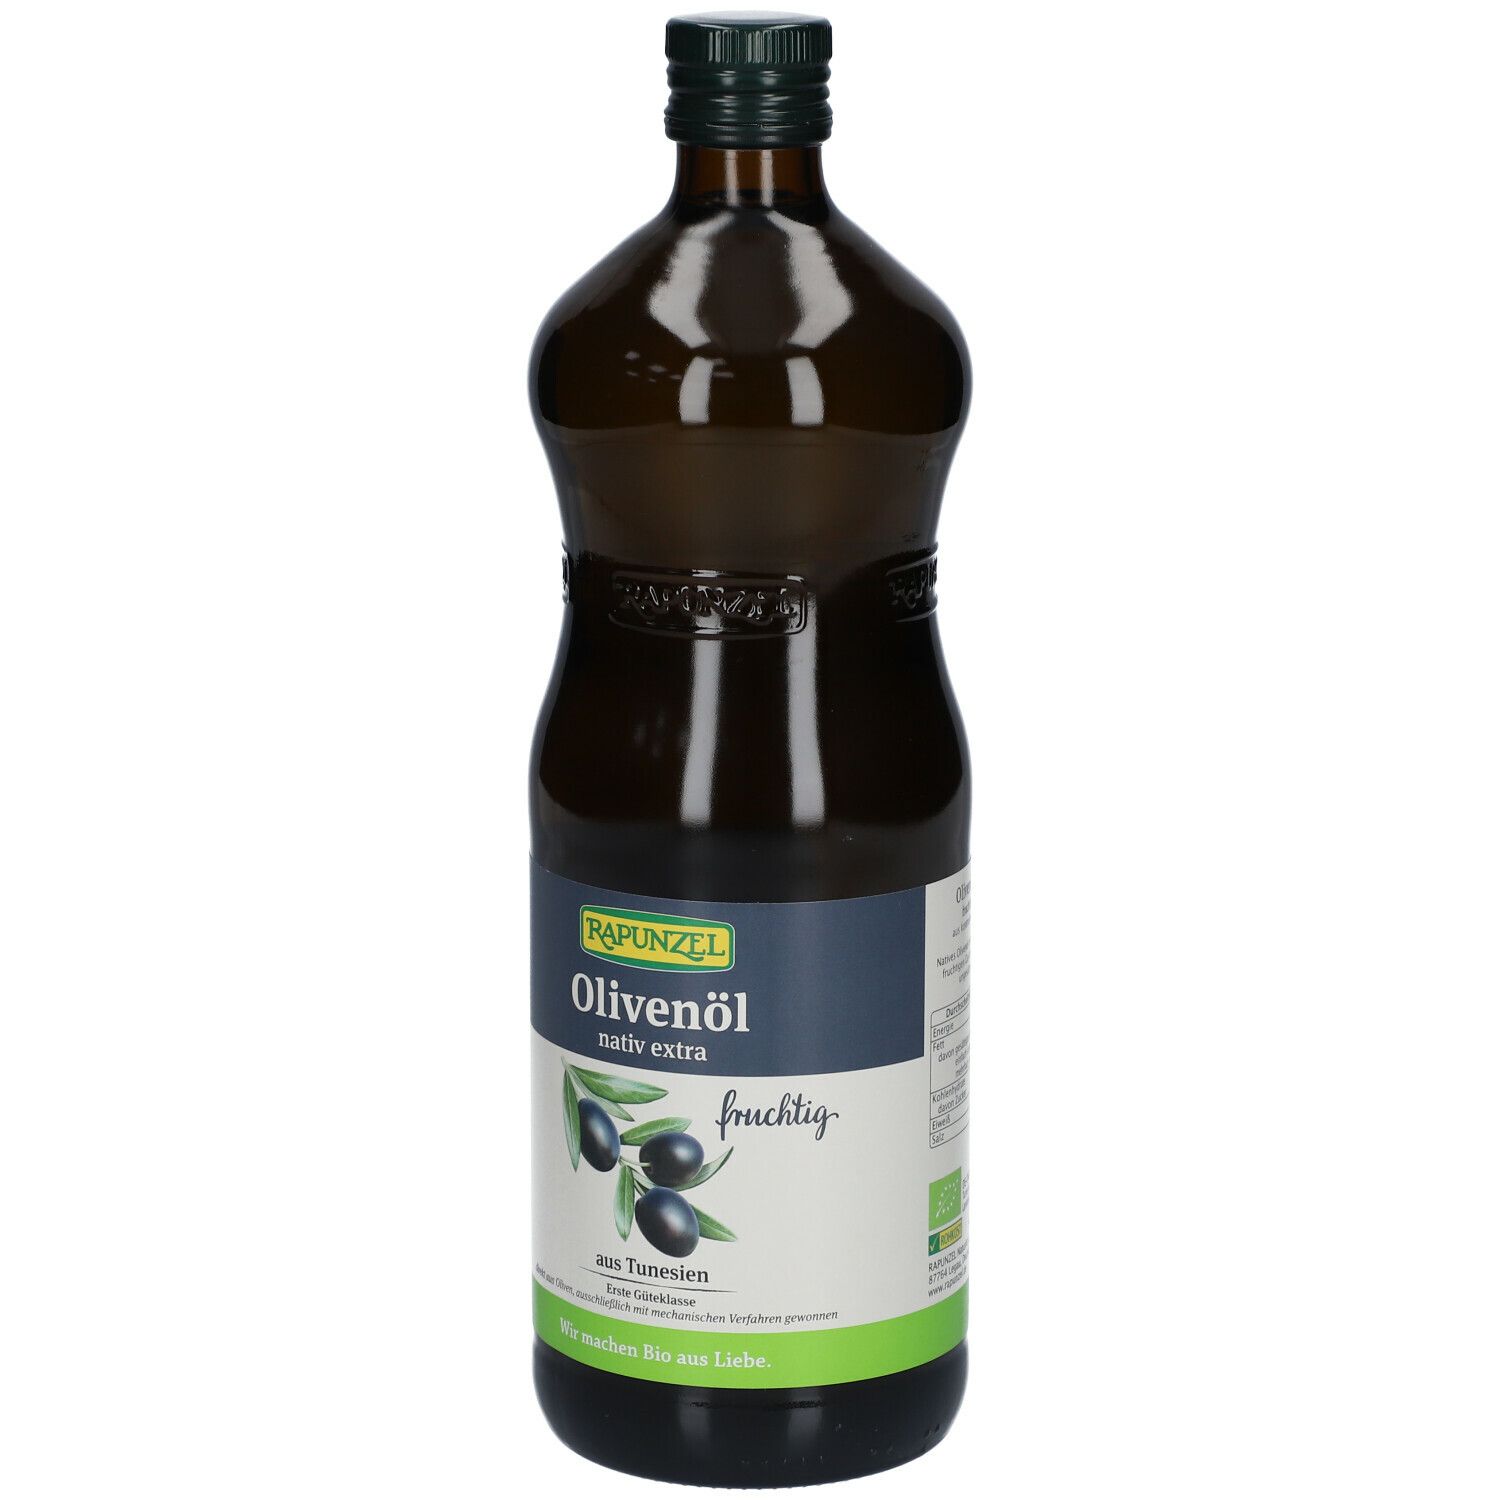 RAPUNZEL Bio Olivenöl nativ extra